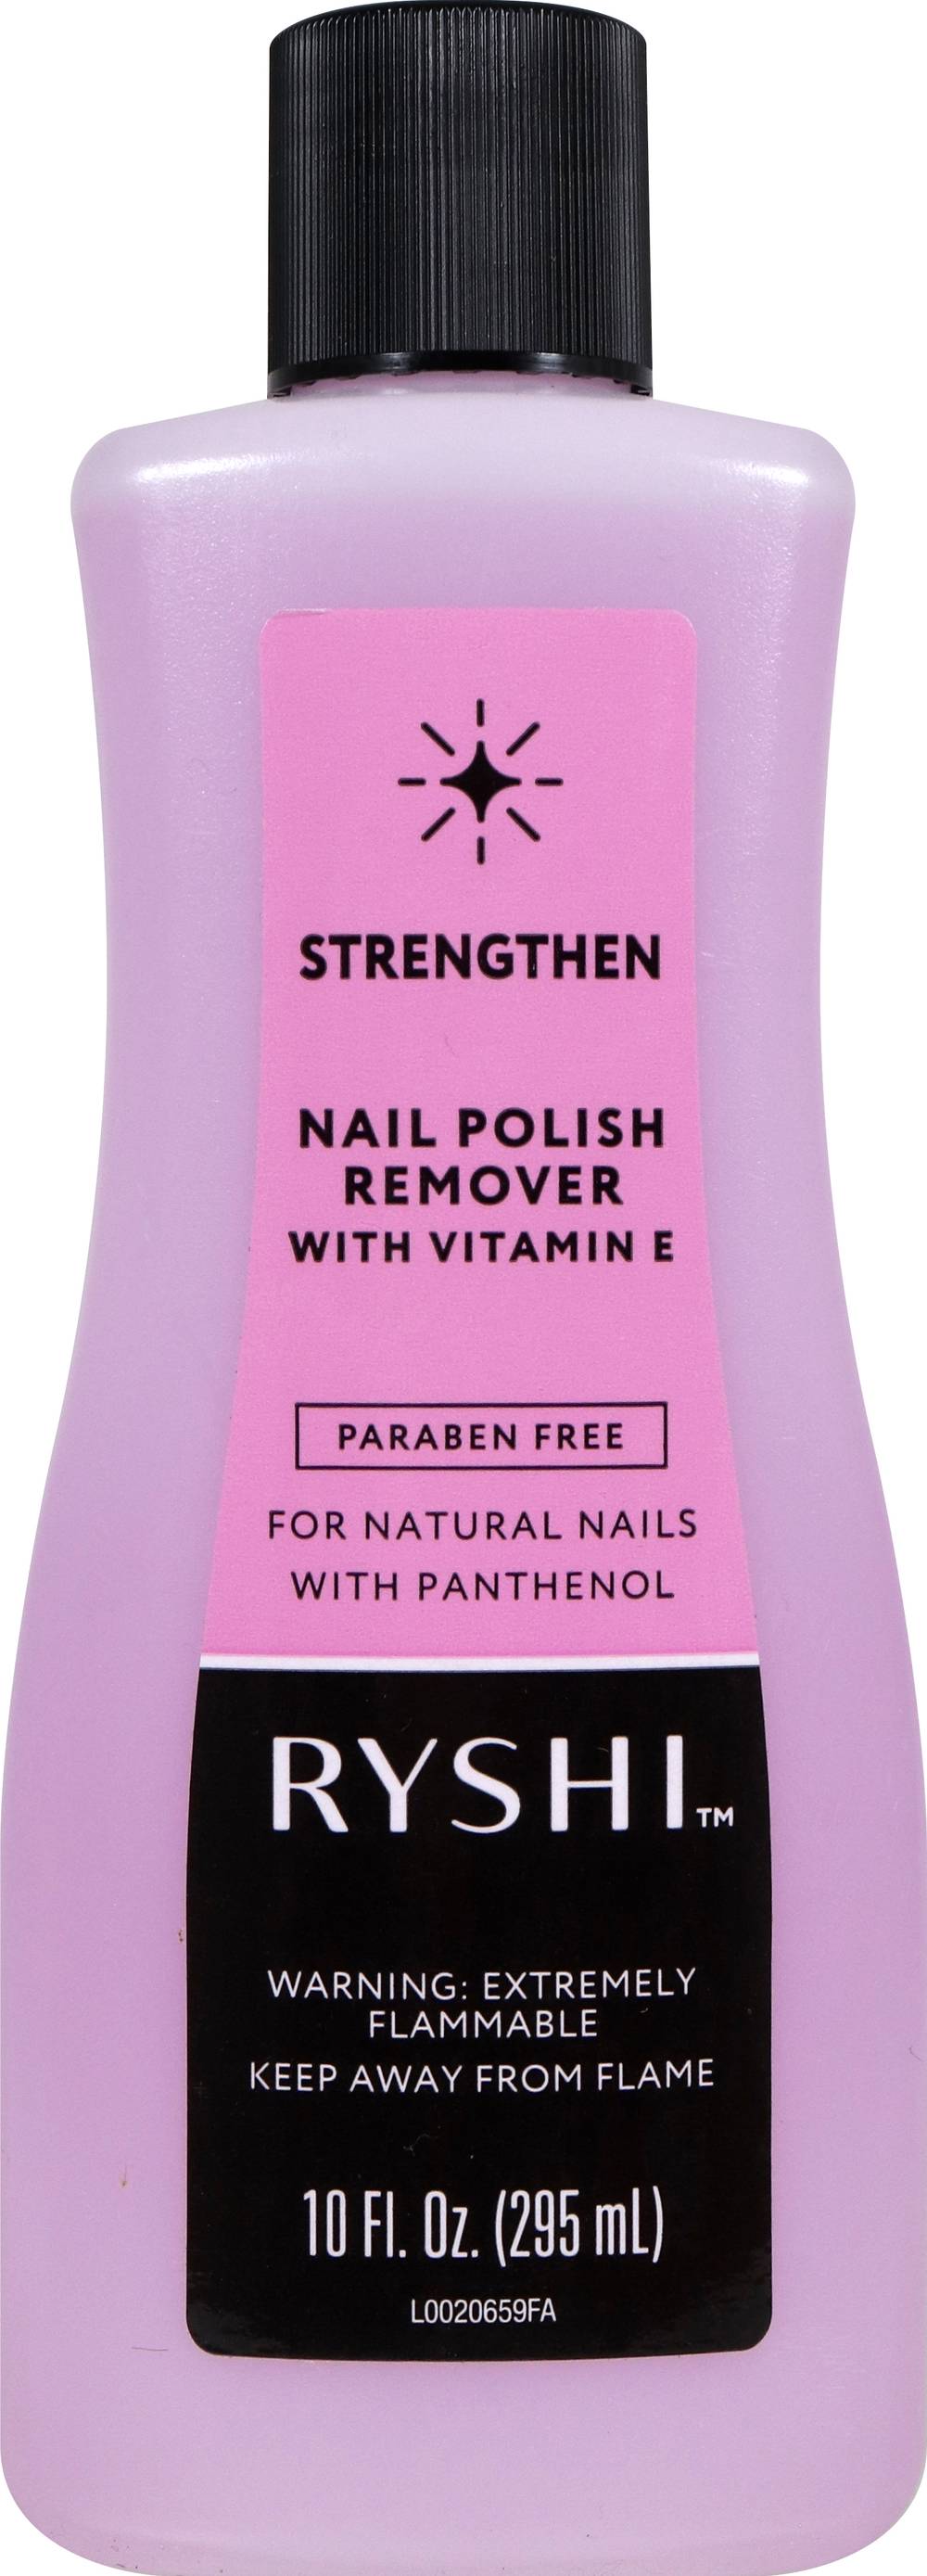 Ryshi Strengthen Nail Polish Remover - Vitamin E, 10 fl oz